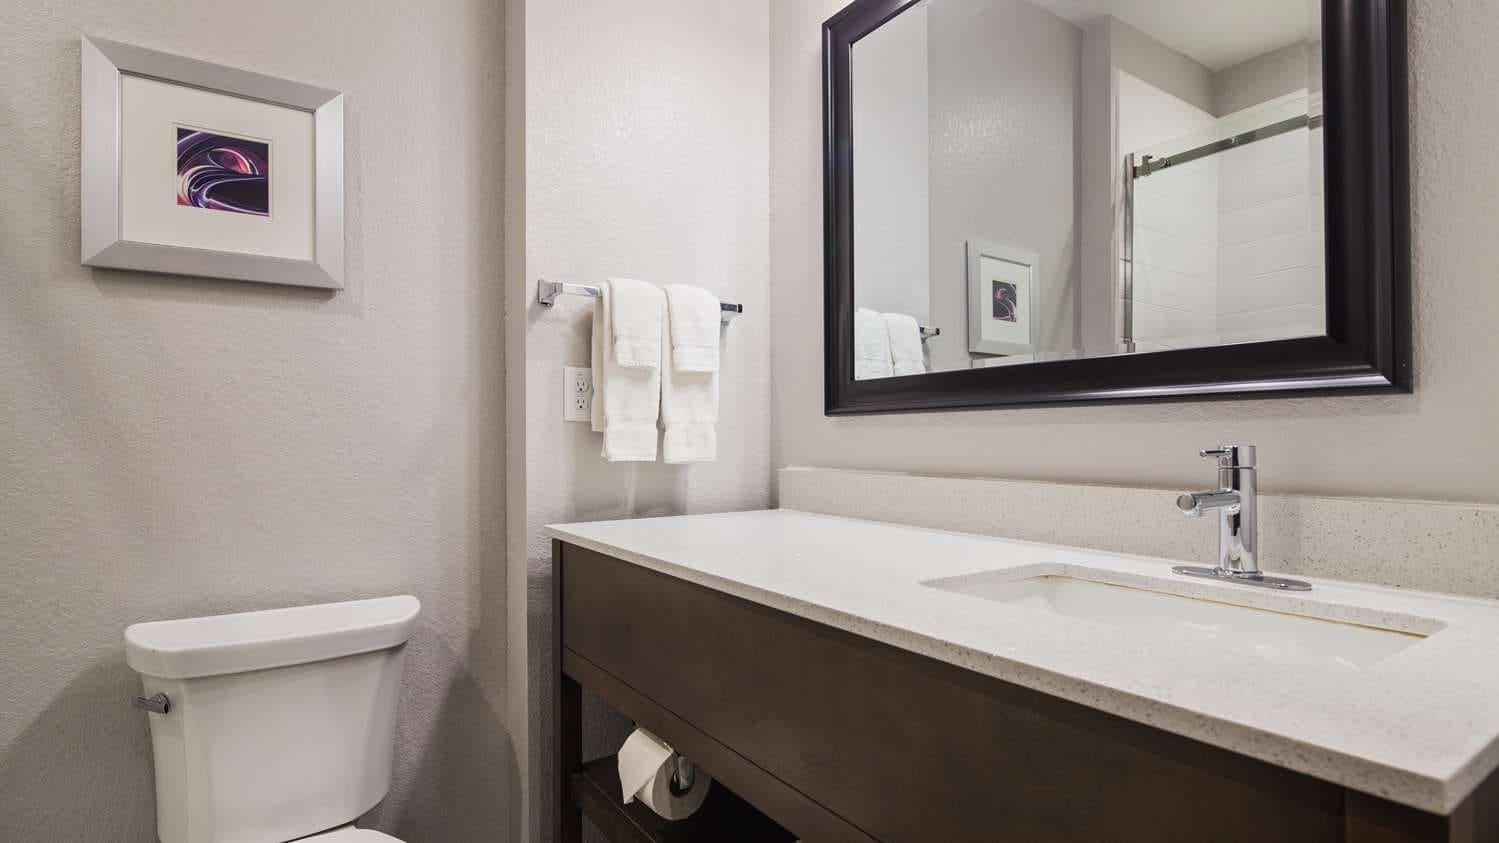 39 décorations de wc nature pour vous inspirer  Bathroom interior design,  Toilet room decor, Bathroom interior